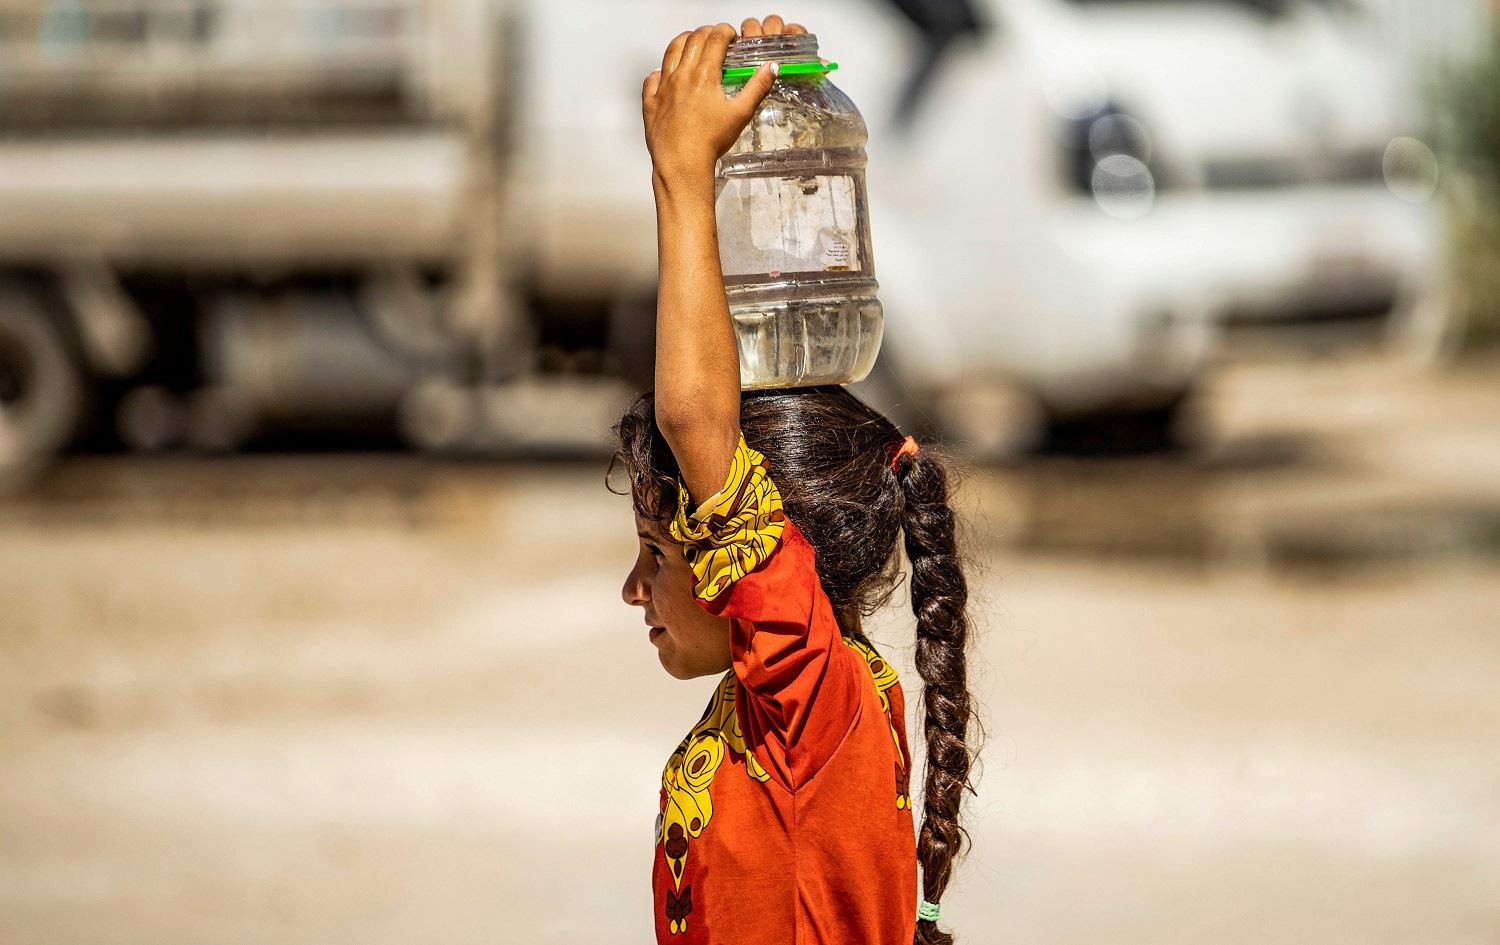 Water shortage in Syria